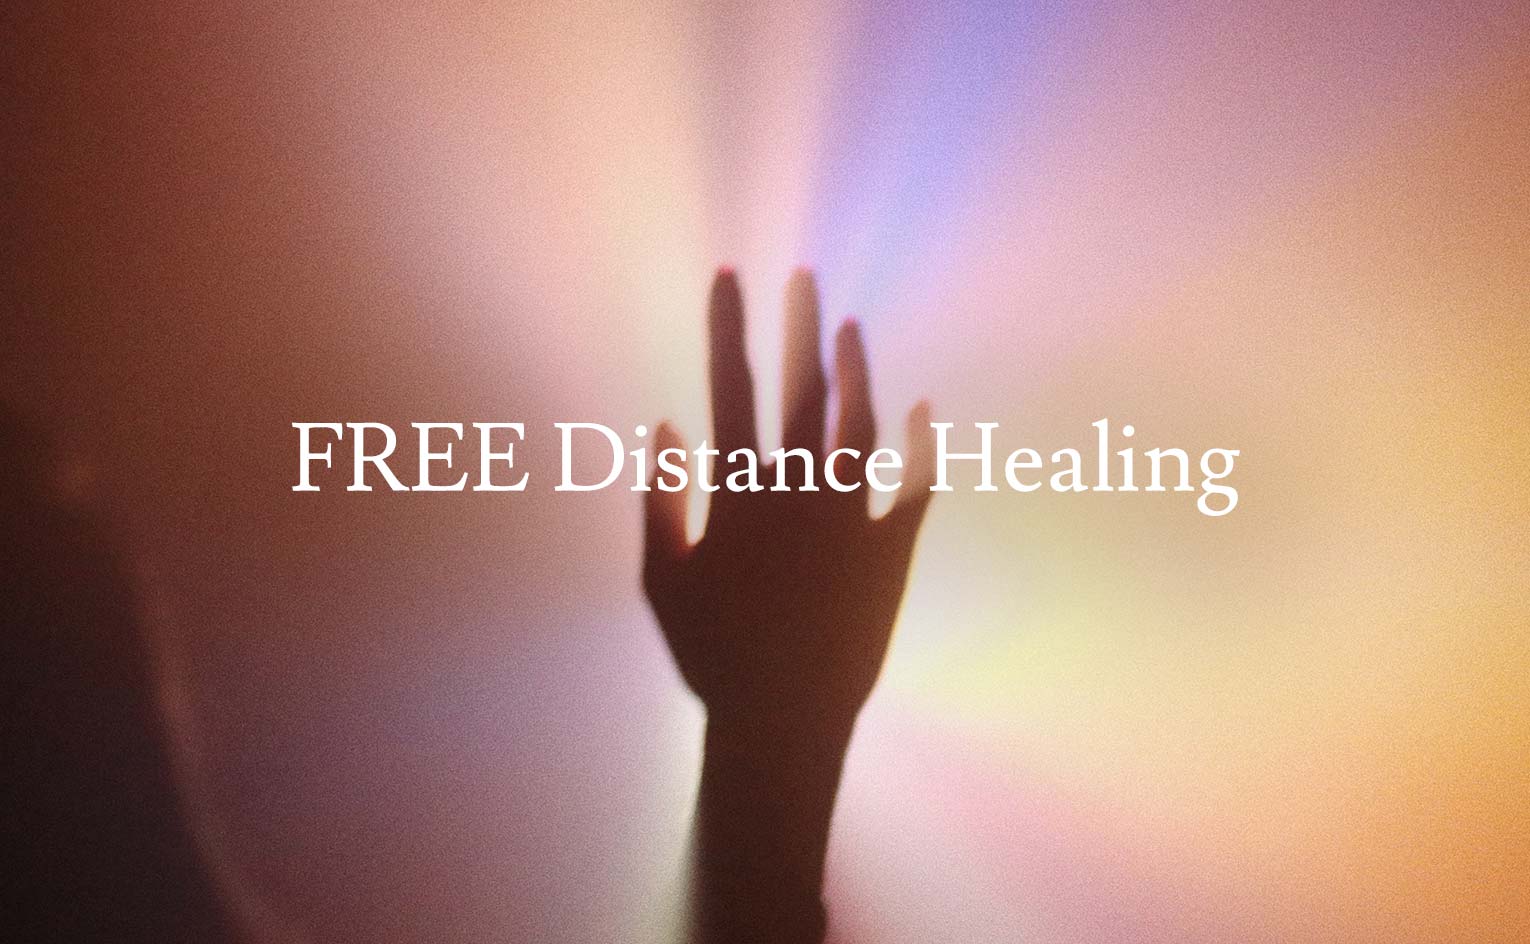 FREE Distance Healing